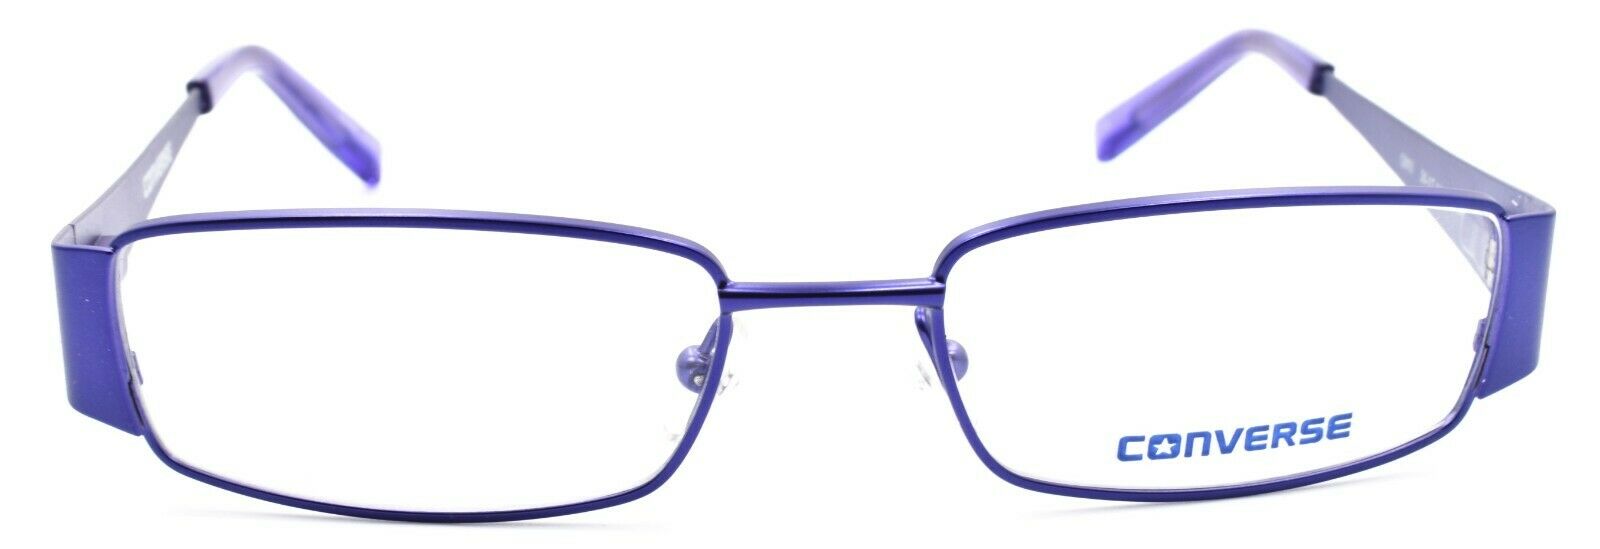 2-CONVERSE Q003 Women's Eyeglasses Frames 50-17-135 Purple + CASE-751286245035-IKSpecs